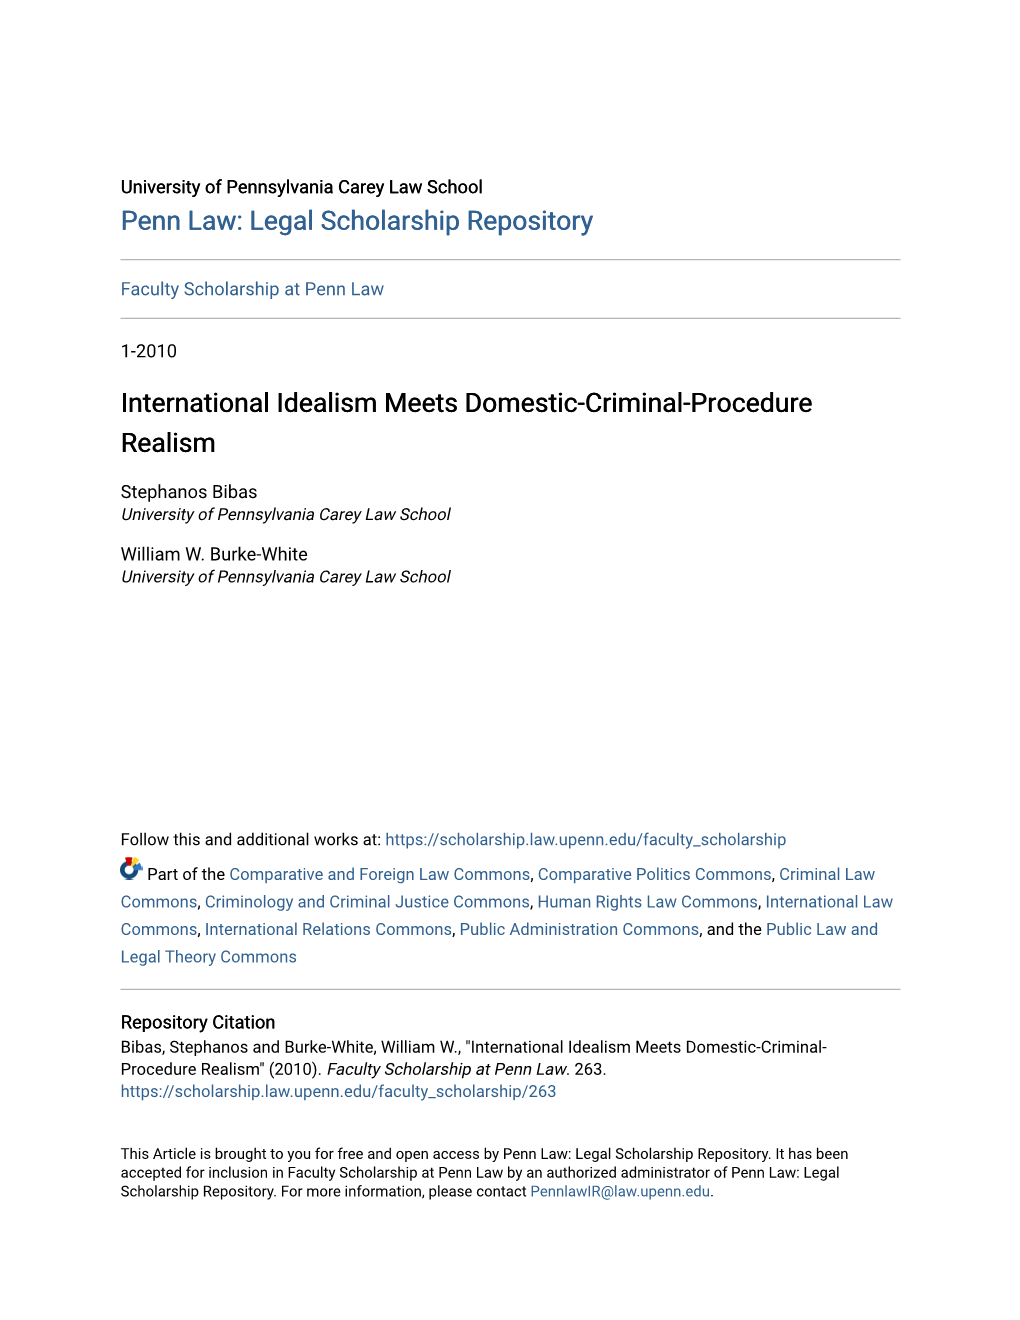 International Idealism Meets Domestic-Criminal-Procedure Realism